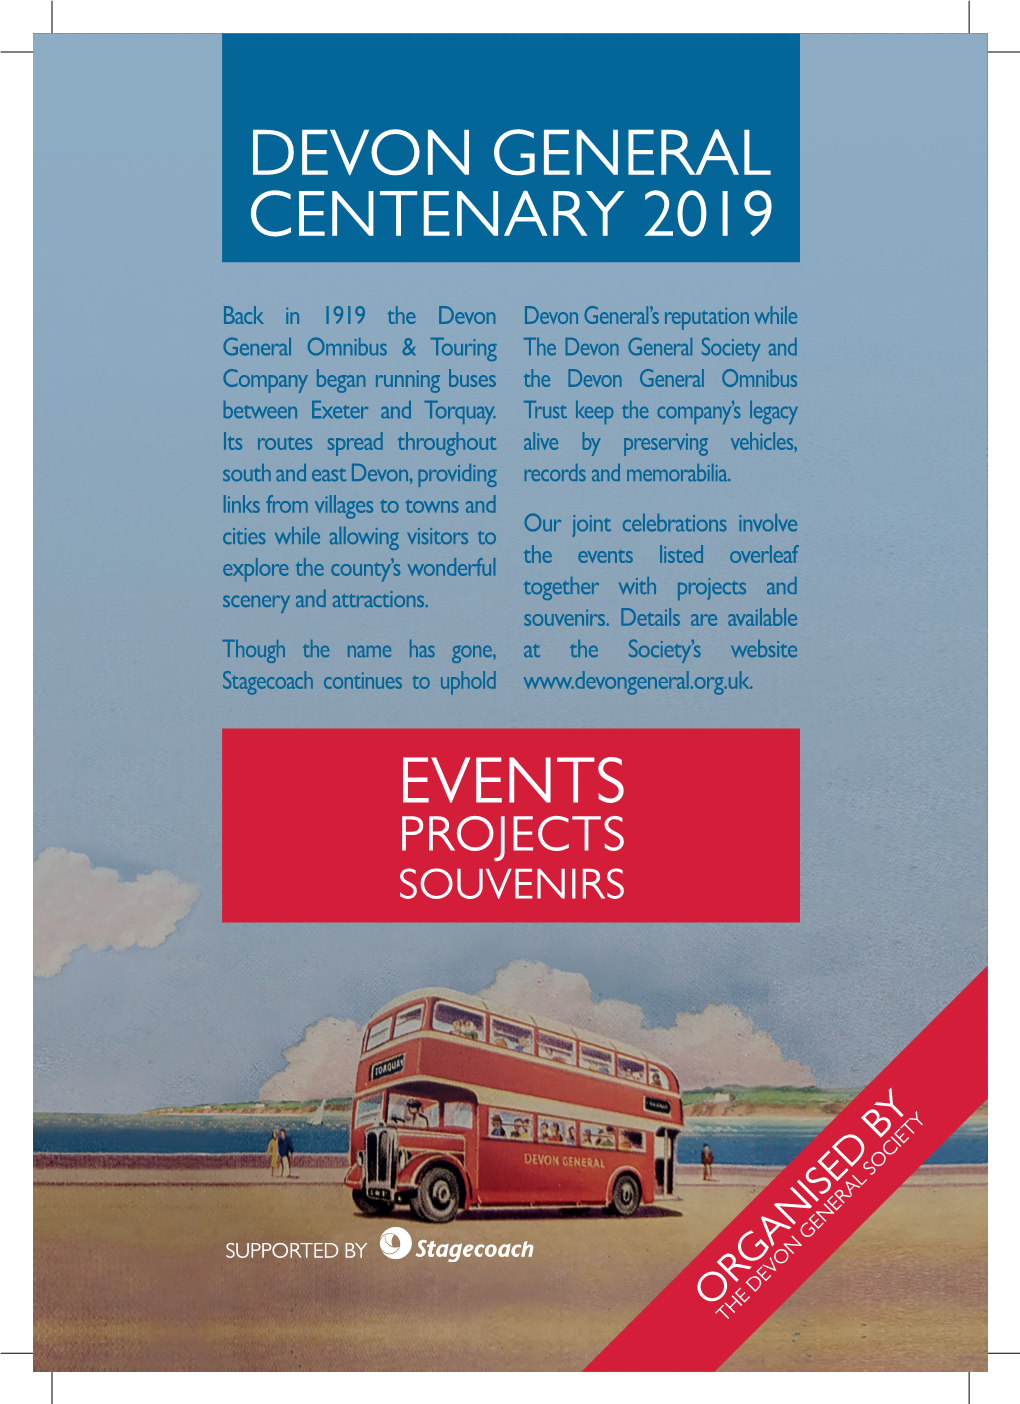 Devon General Centenary 2019 Events